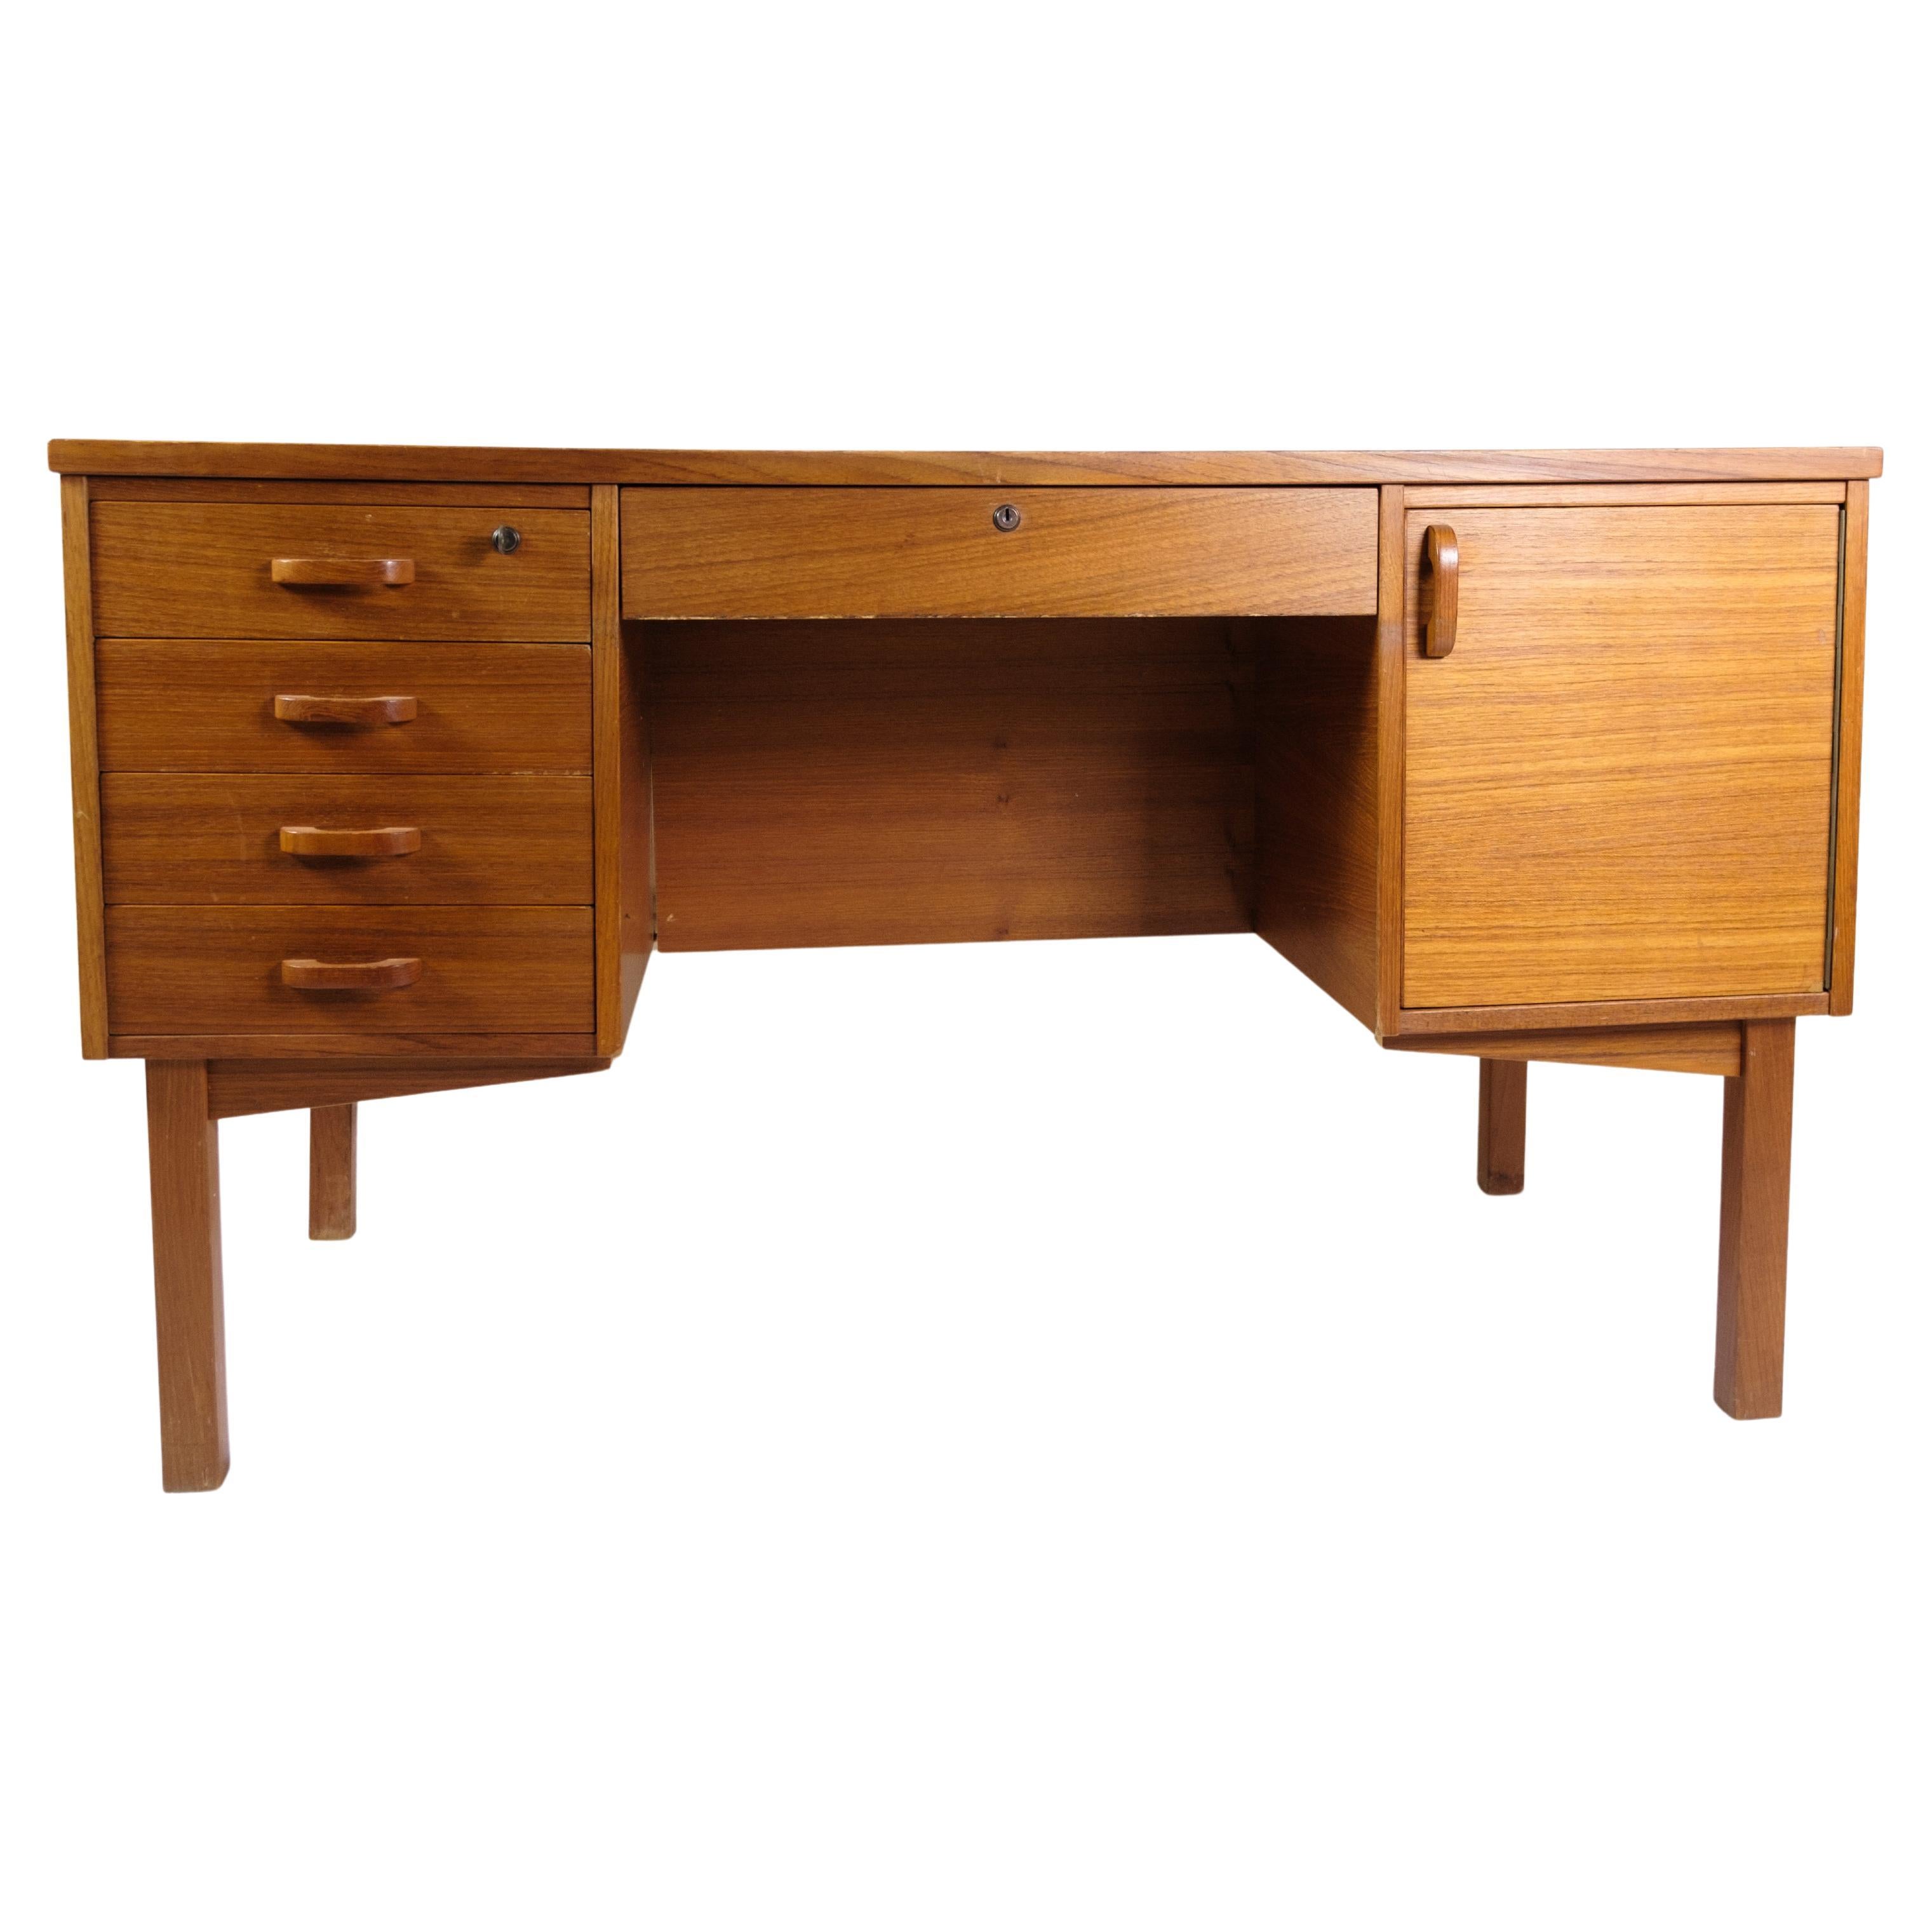 Desk Made in Teak of Danish Design From 1960s For Sale